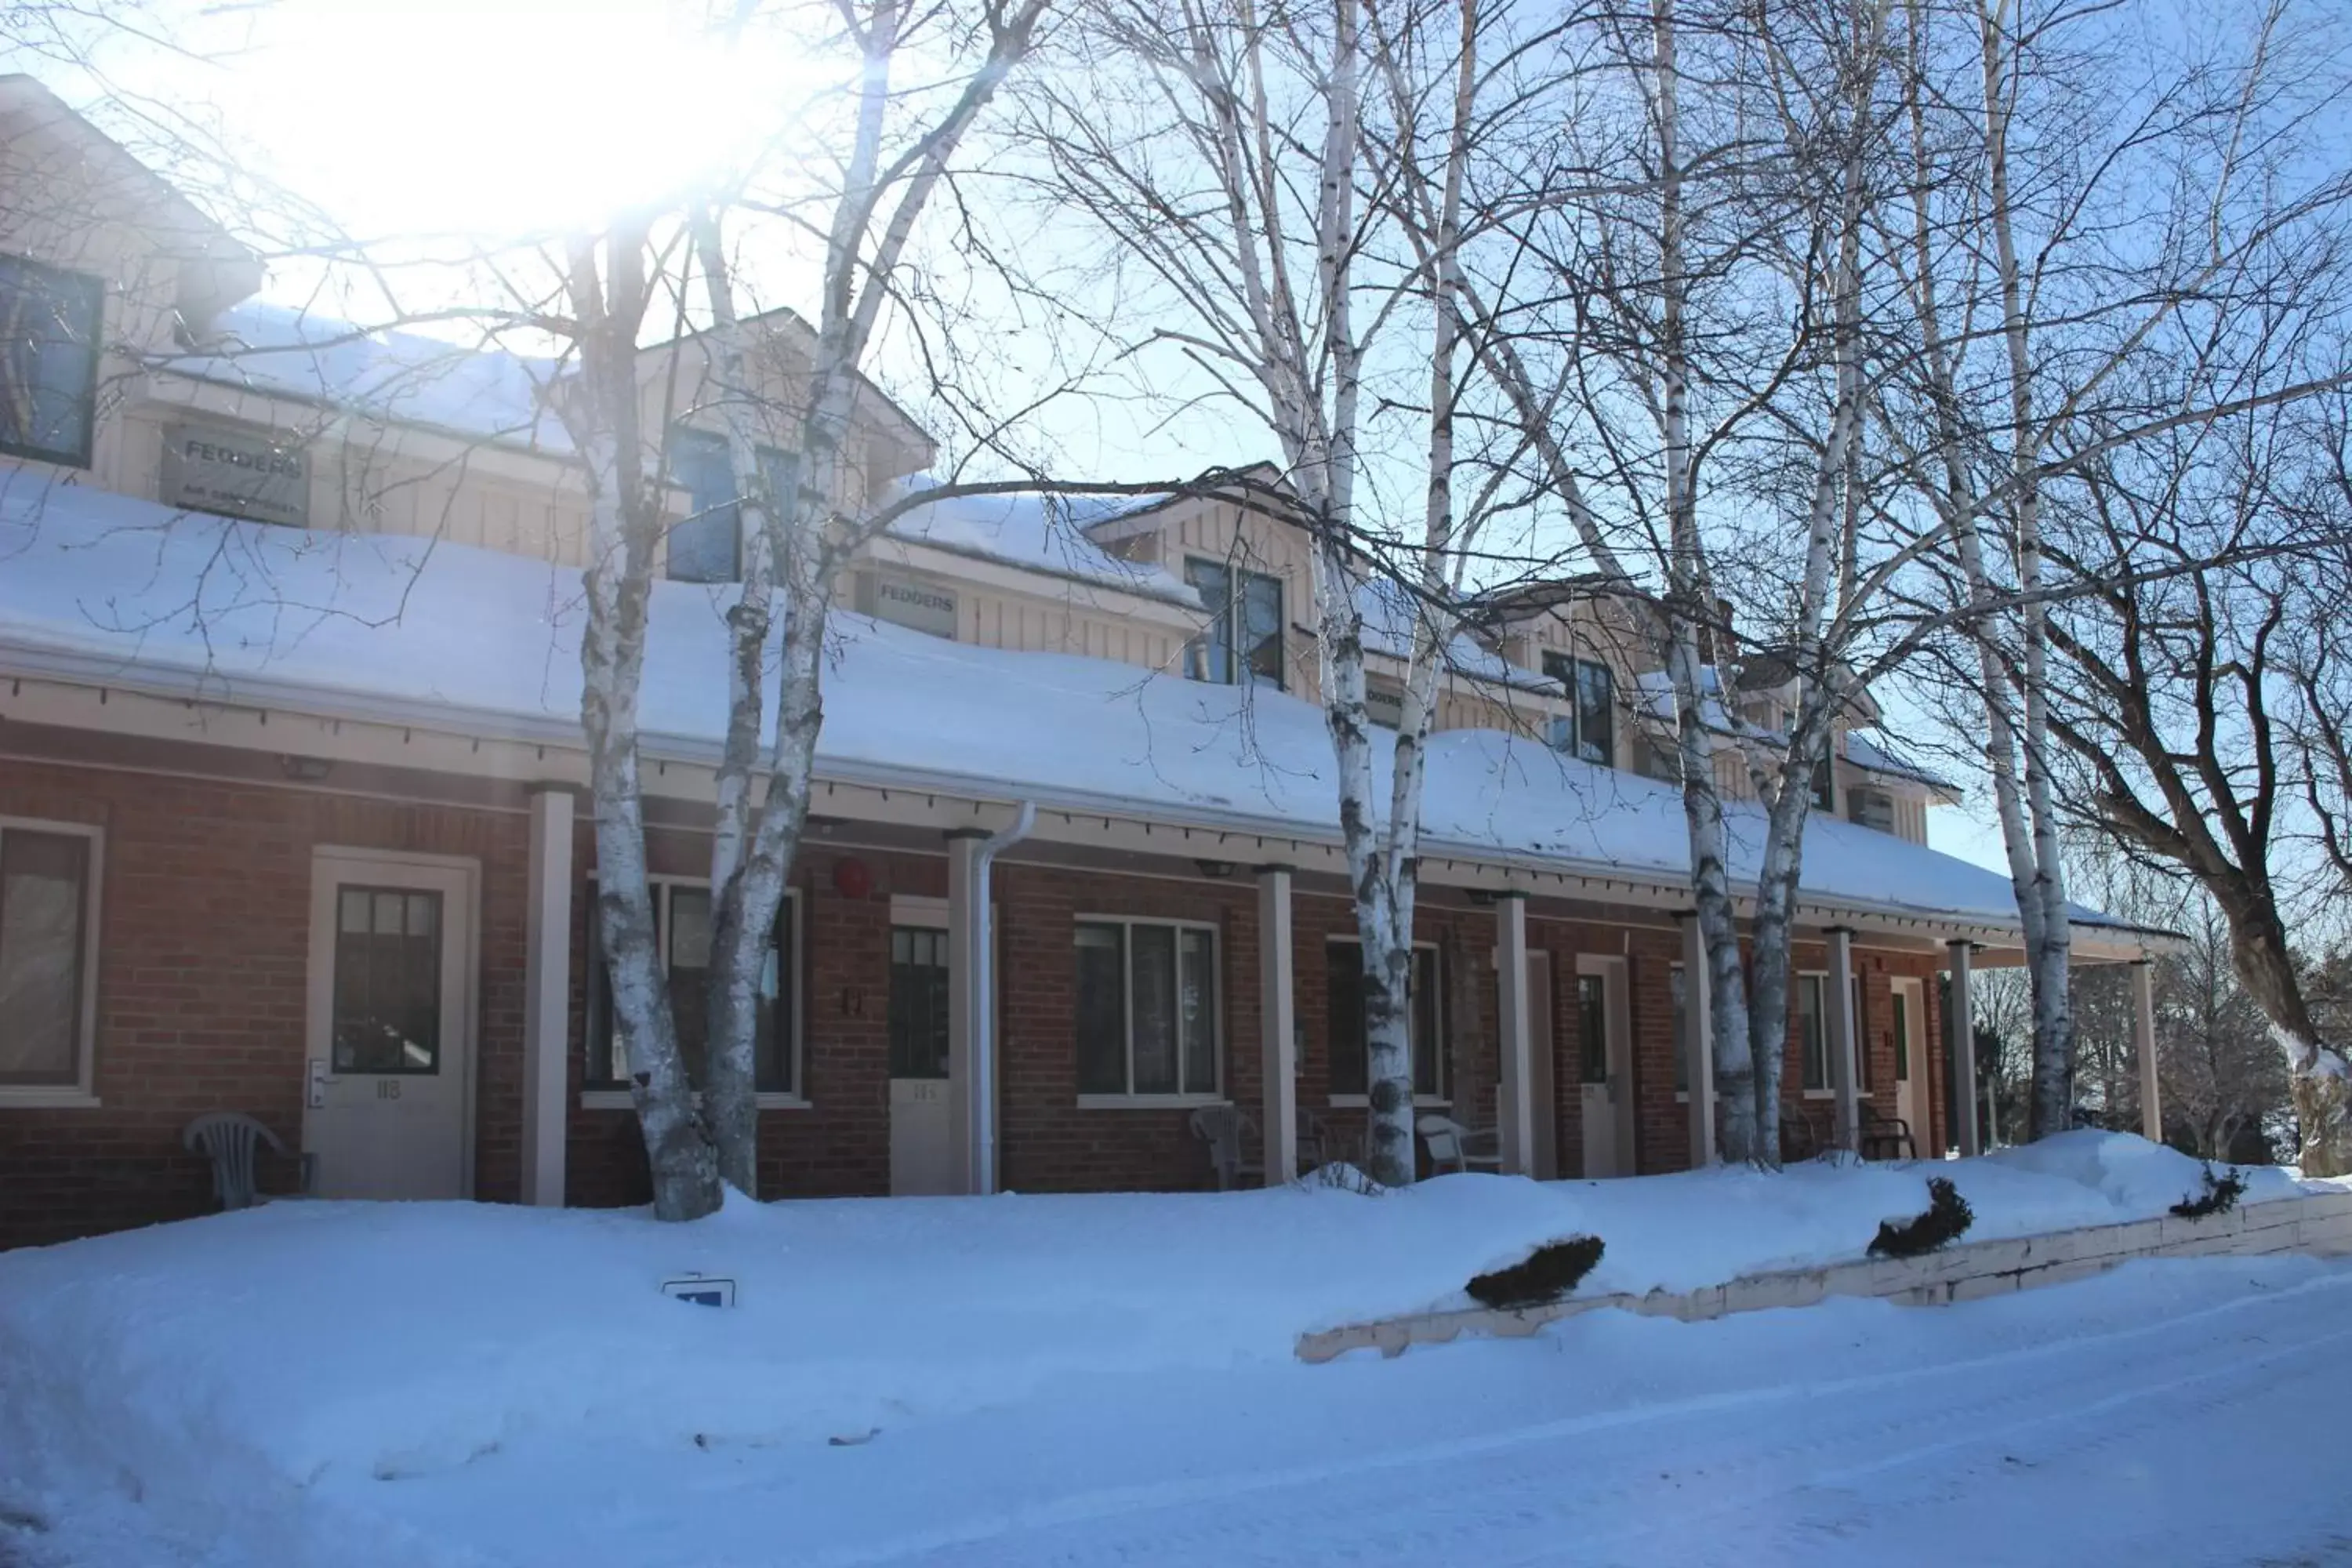 Property building, Winter in Isaiah Tubbs Resort